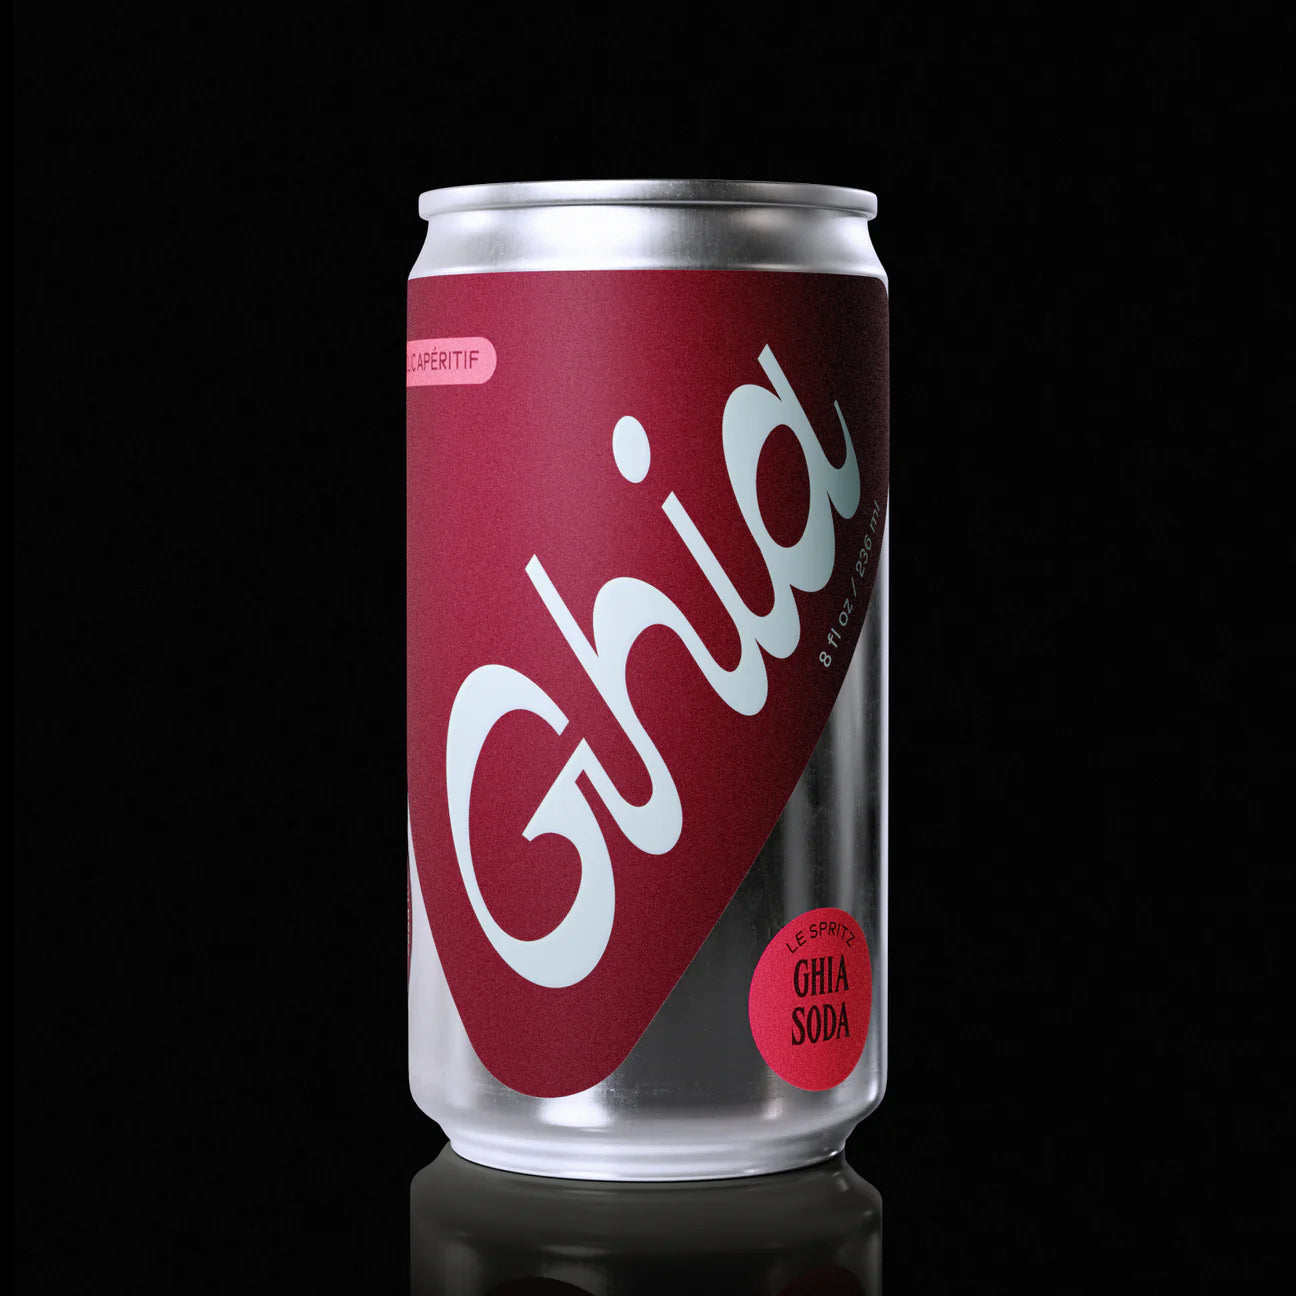 Ghia Original Soda available at Rook & Rose.